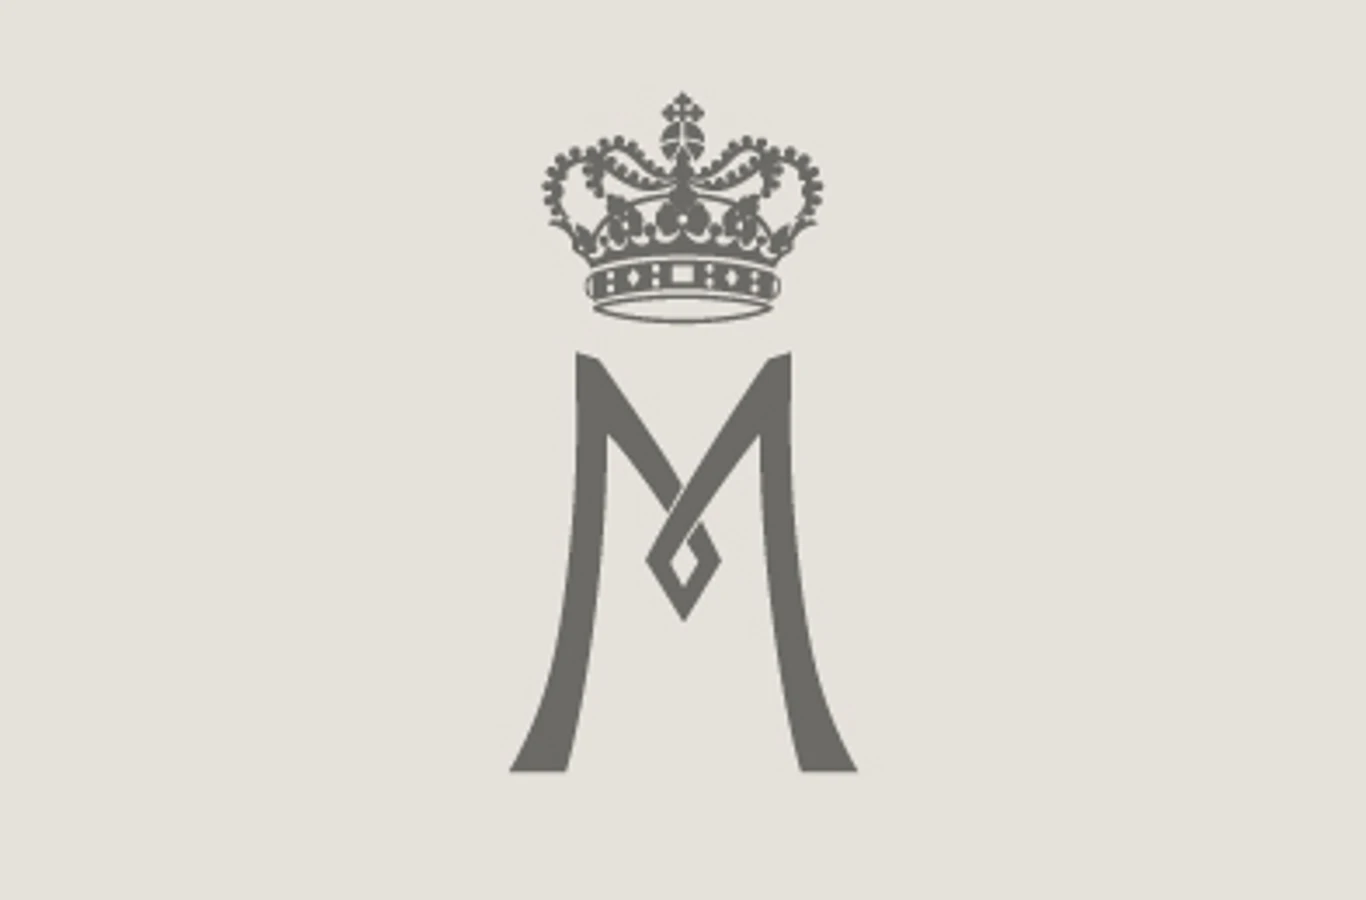 Her Royal Highness the Crown Princess' monogram